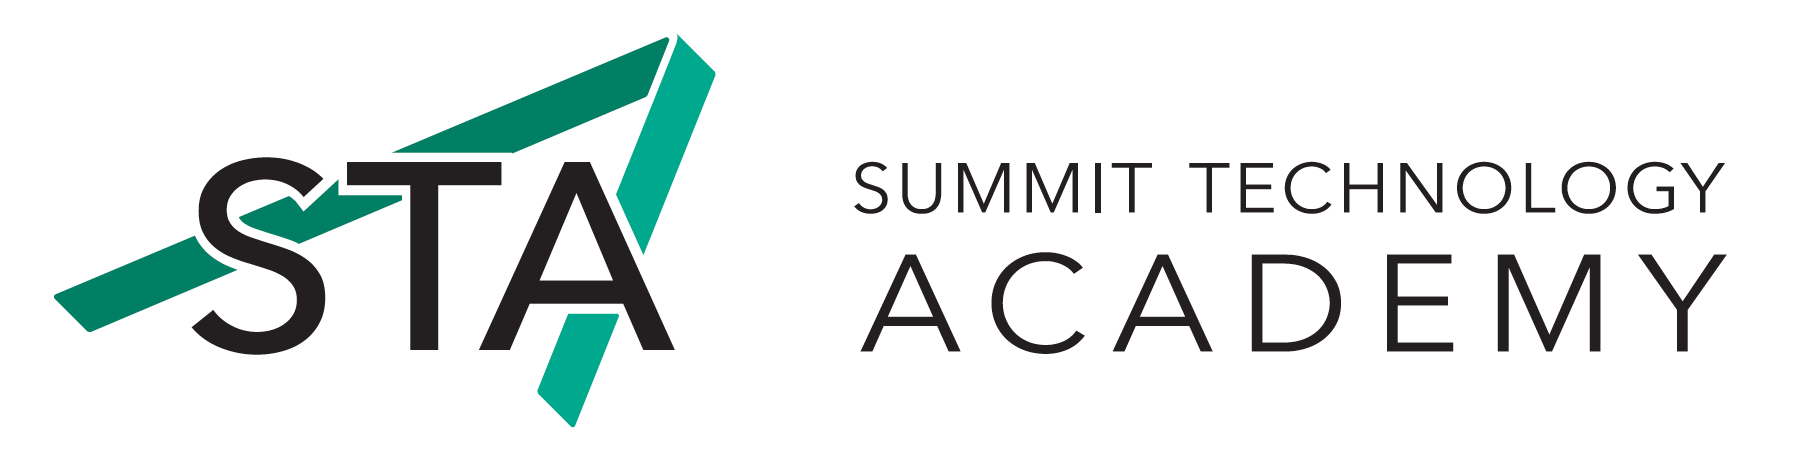 Summit Technology Academy Logo